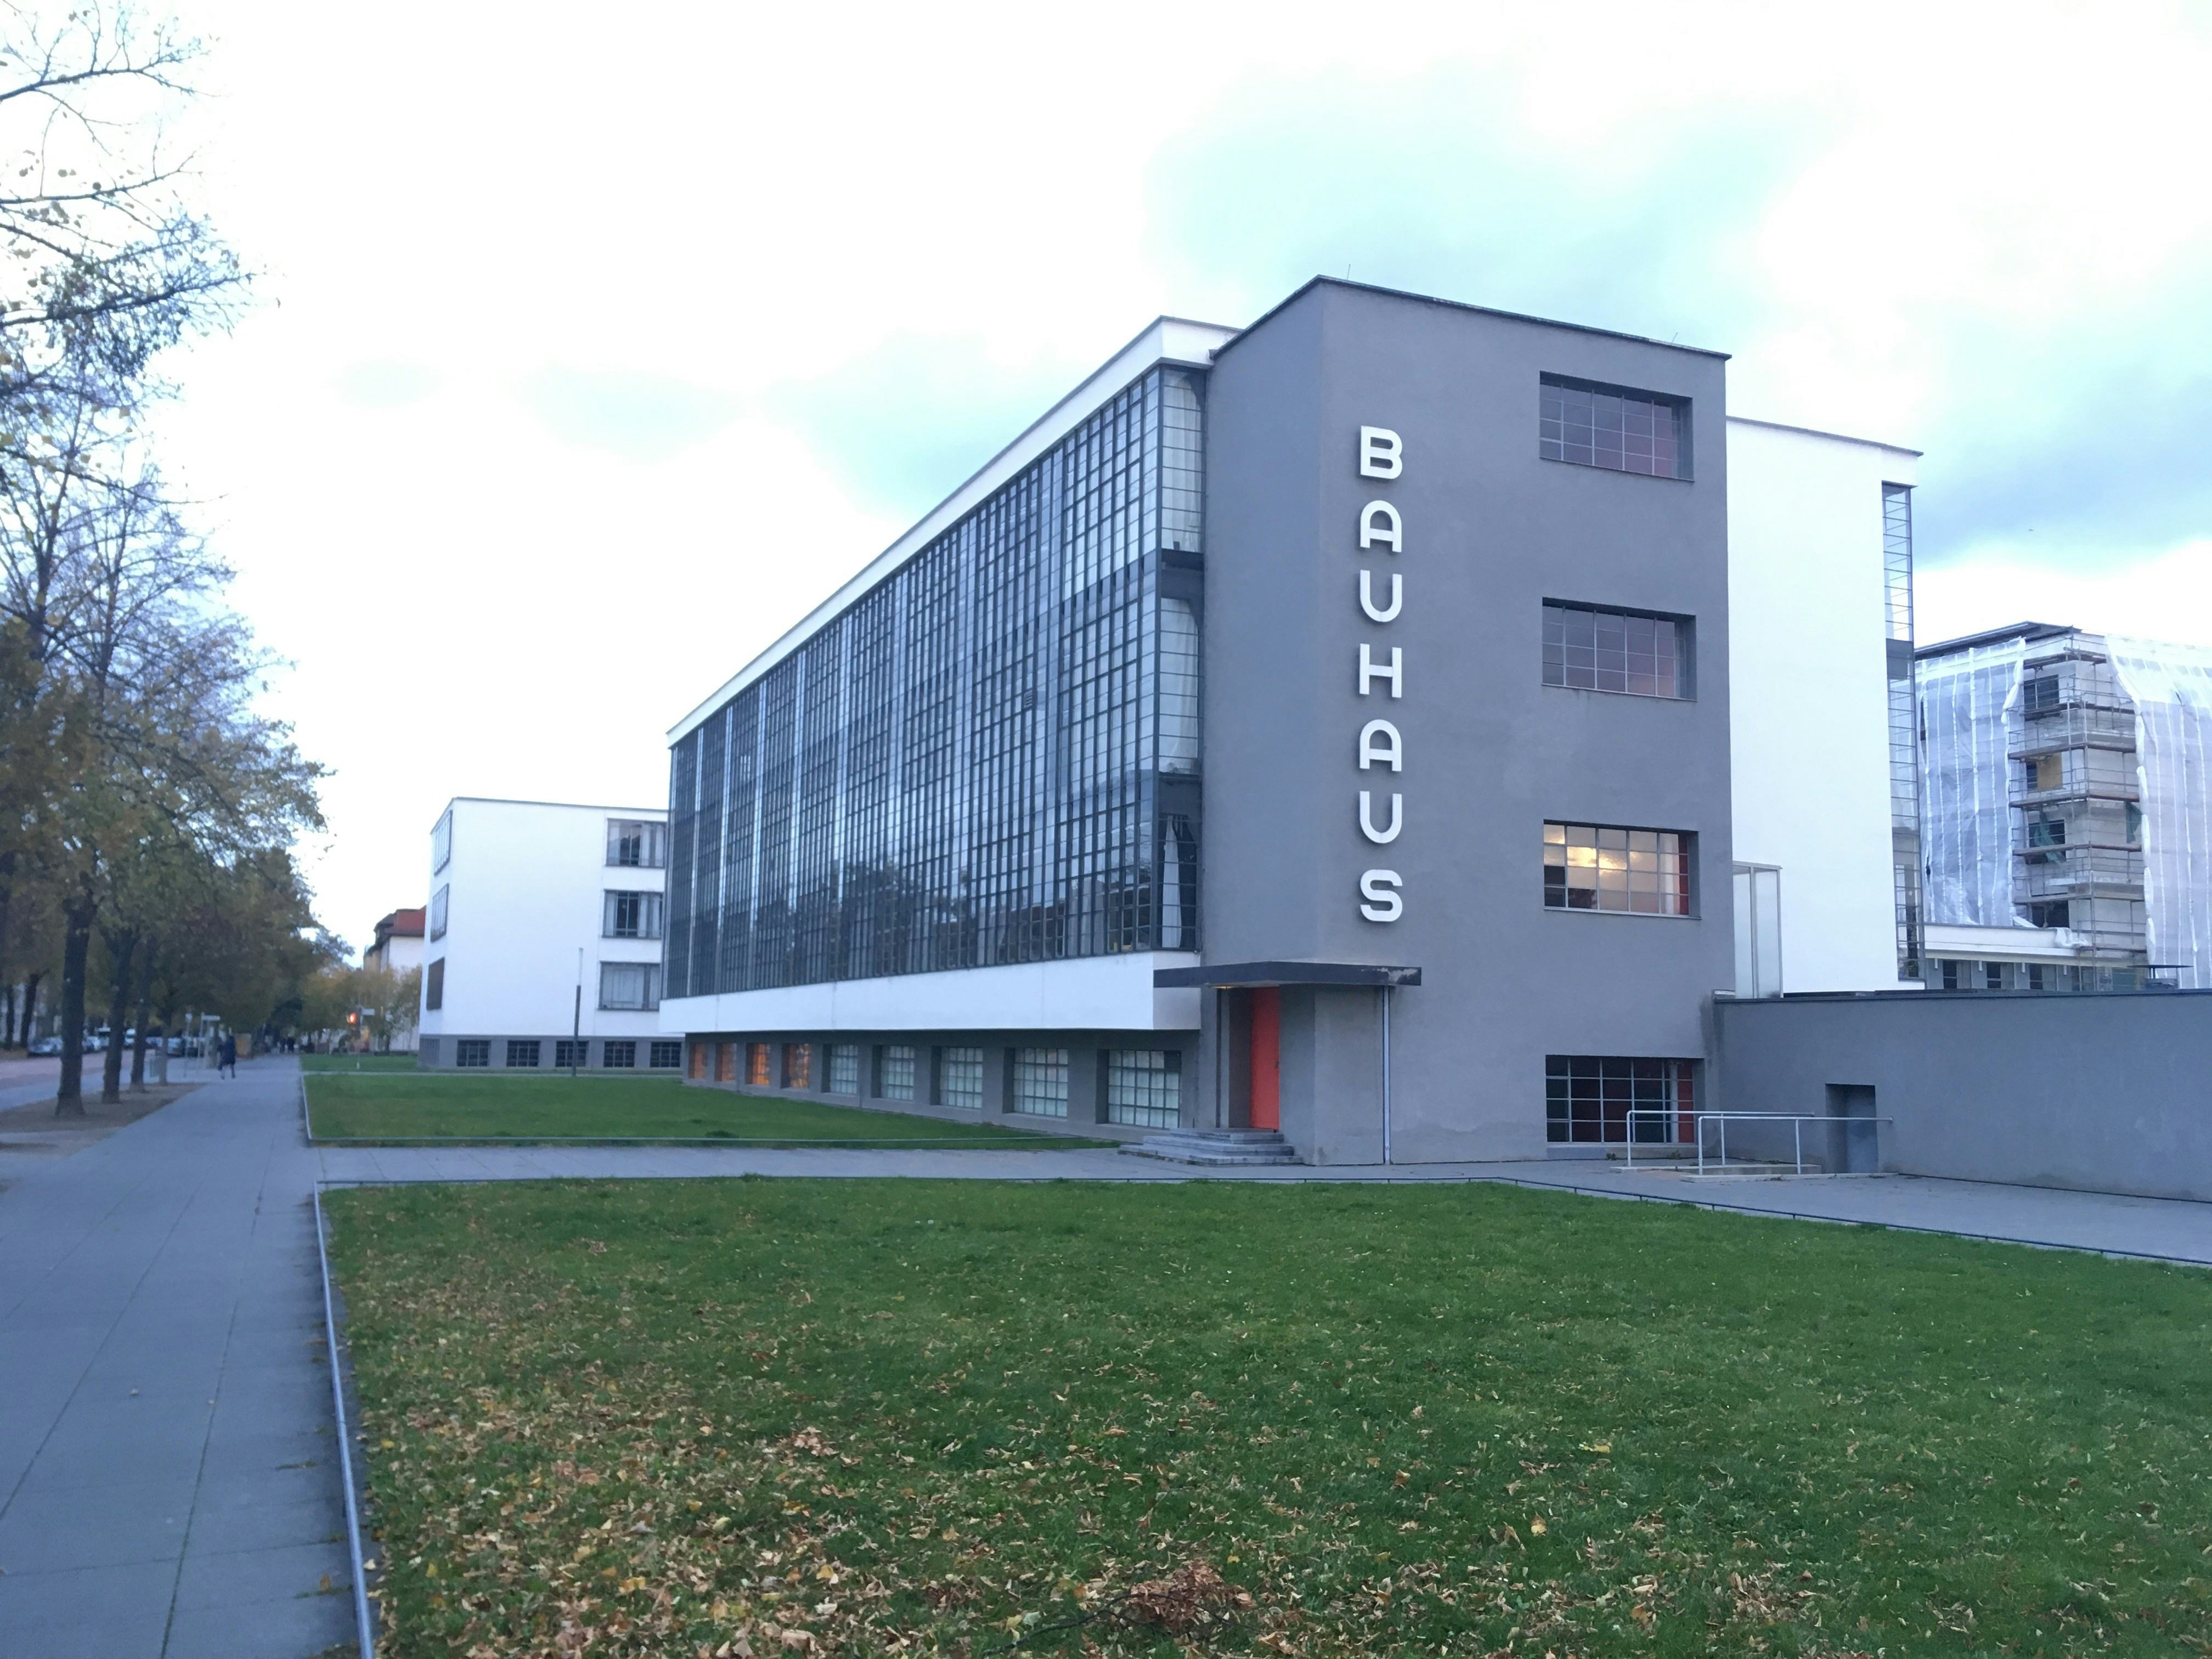 Bauhaus in Dessau, beeld Marieke Giele